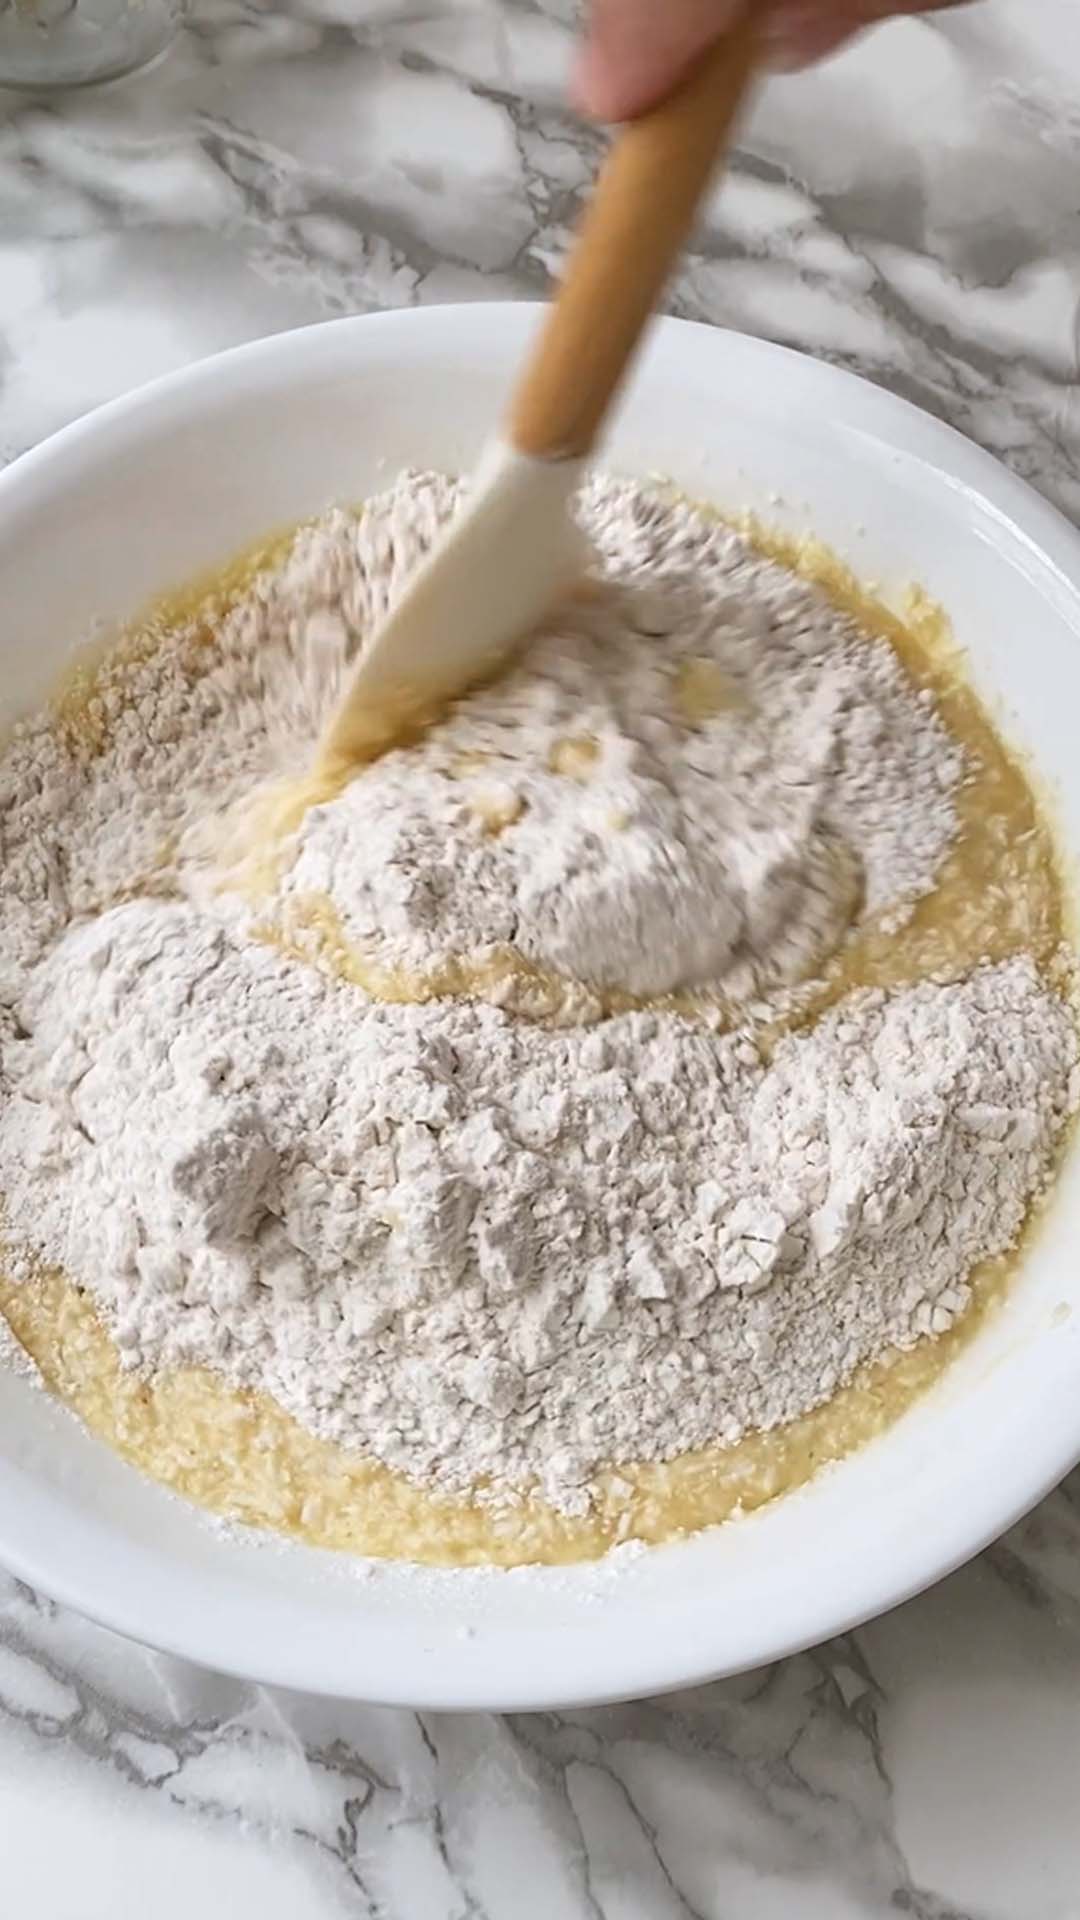 Stirring flour into cake batter.